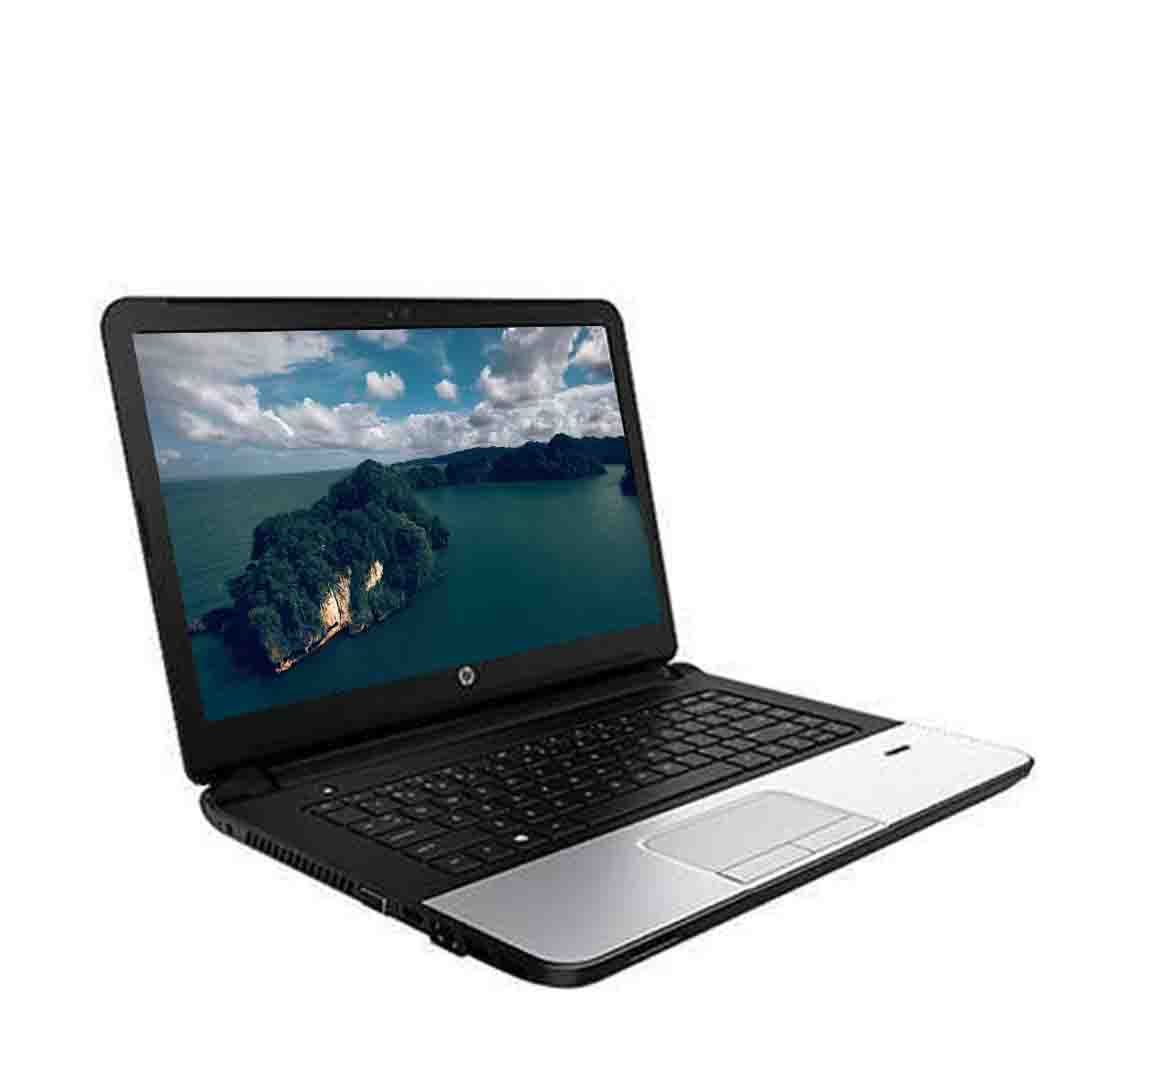 HP EliteBook 340 G1 Business Laptop, Intel Core i5-4th Generation CPU, 8GB RAM, 320GB HDD, 14 inch Display, Windows 10 Pro, Refurbished Laptop